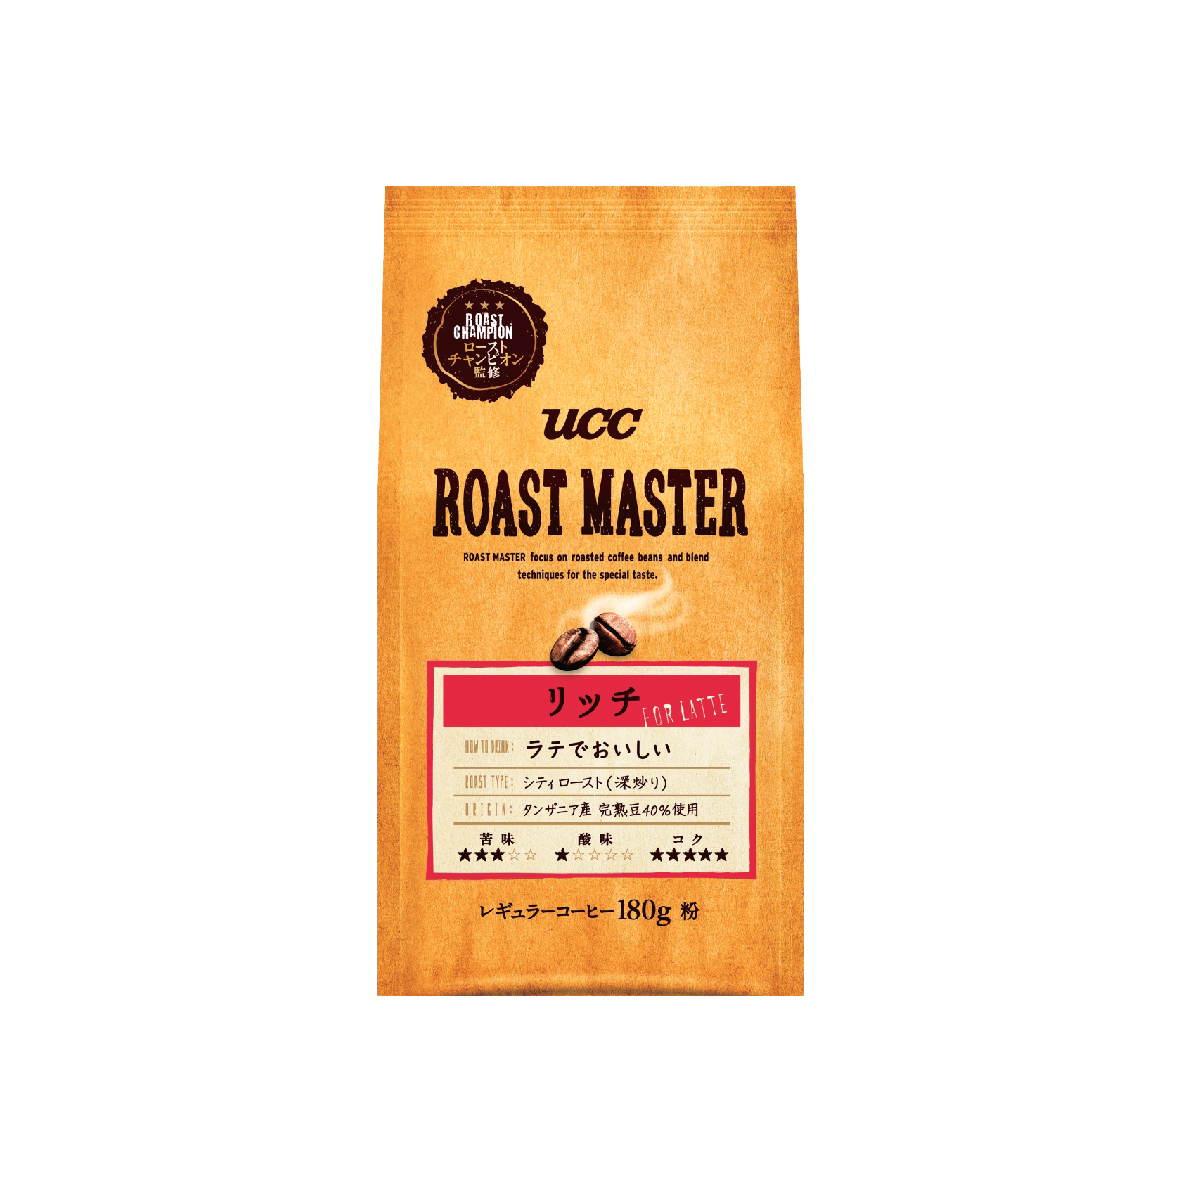 UCC Roast Master Rich Coffee Ground Coffee